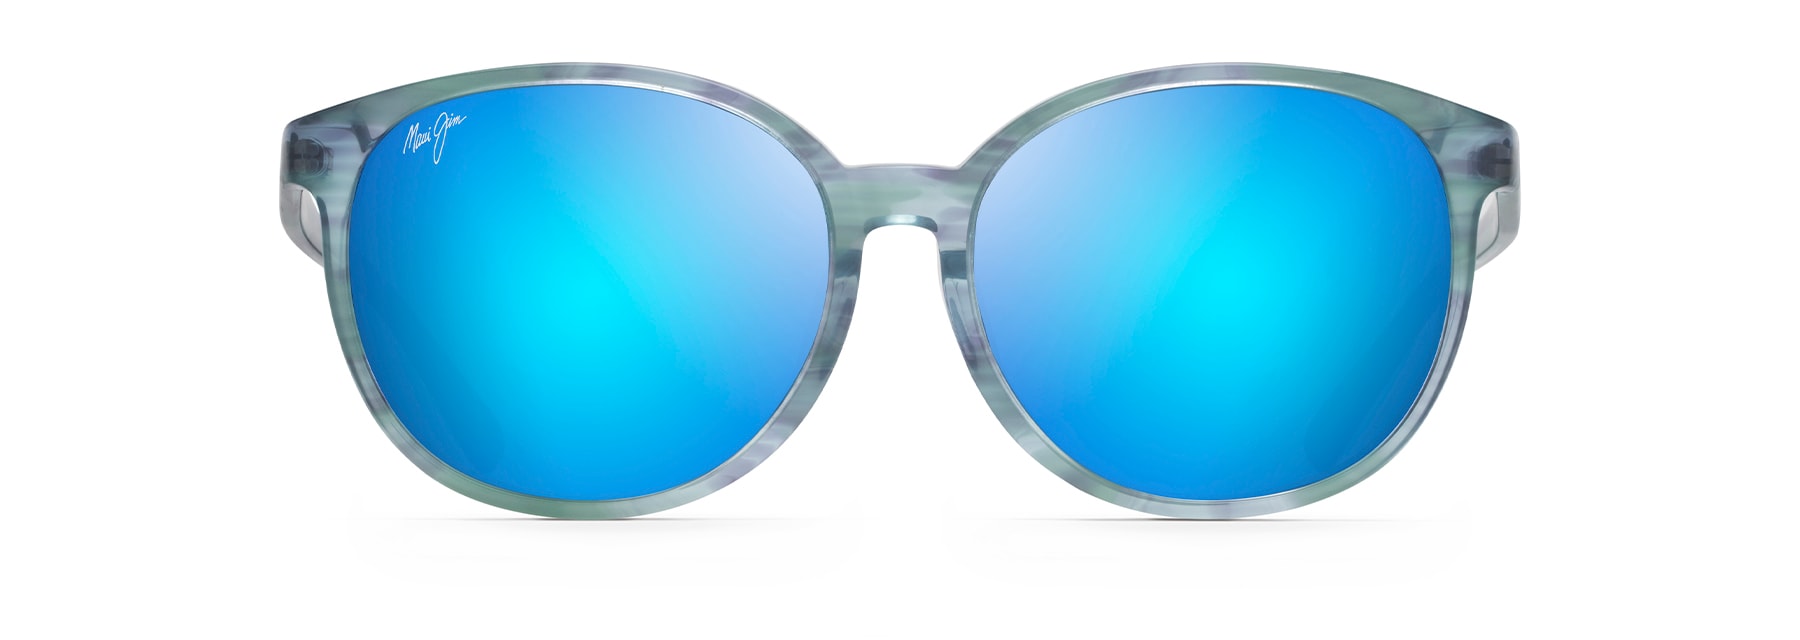 maui jim blue water polarized sunglasses